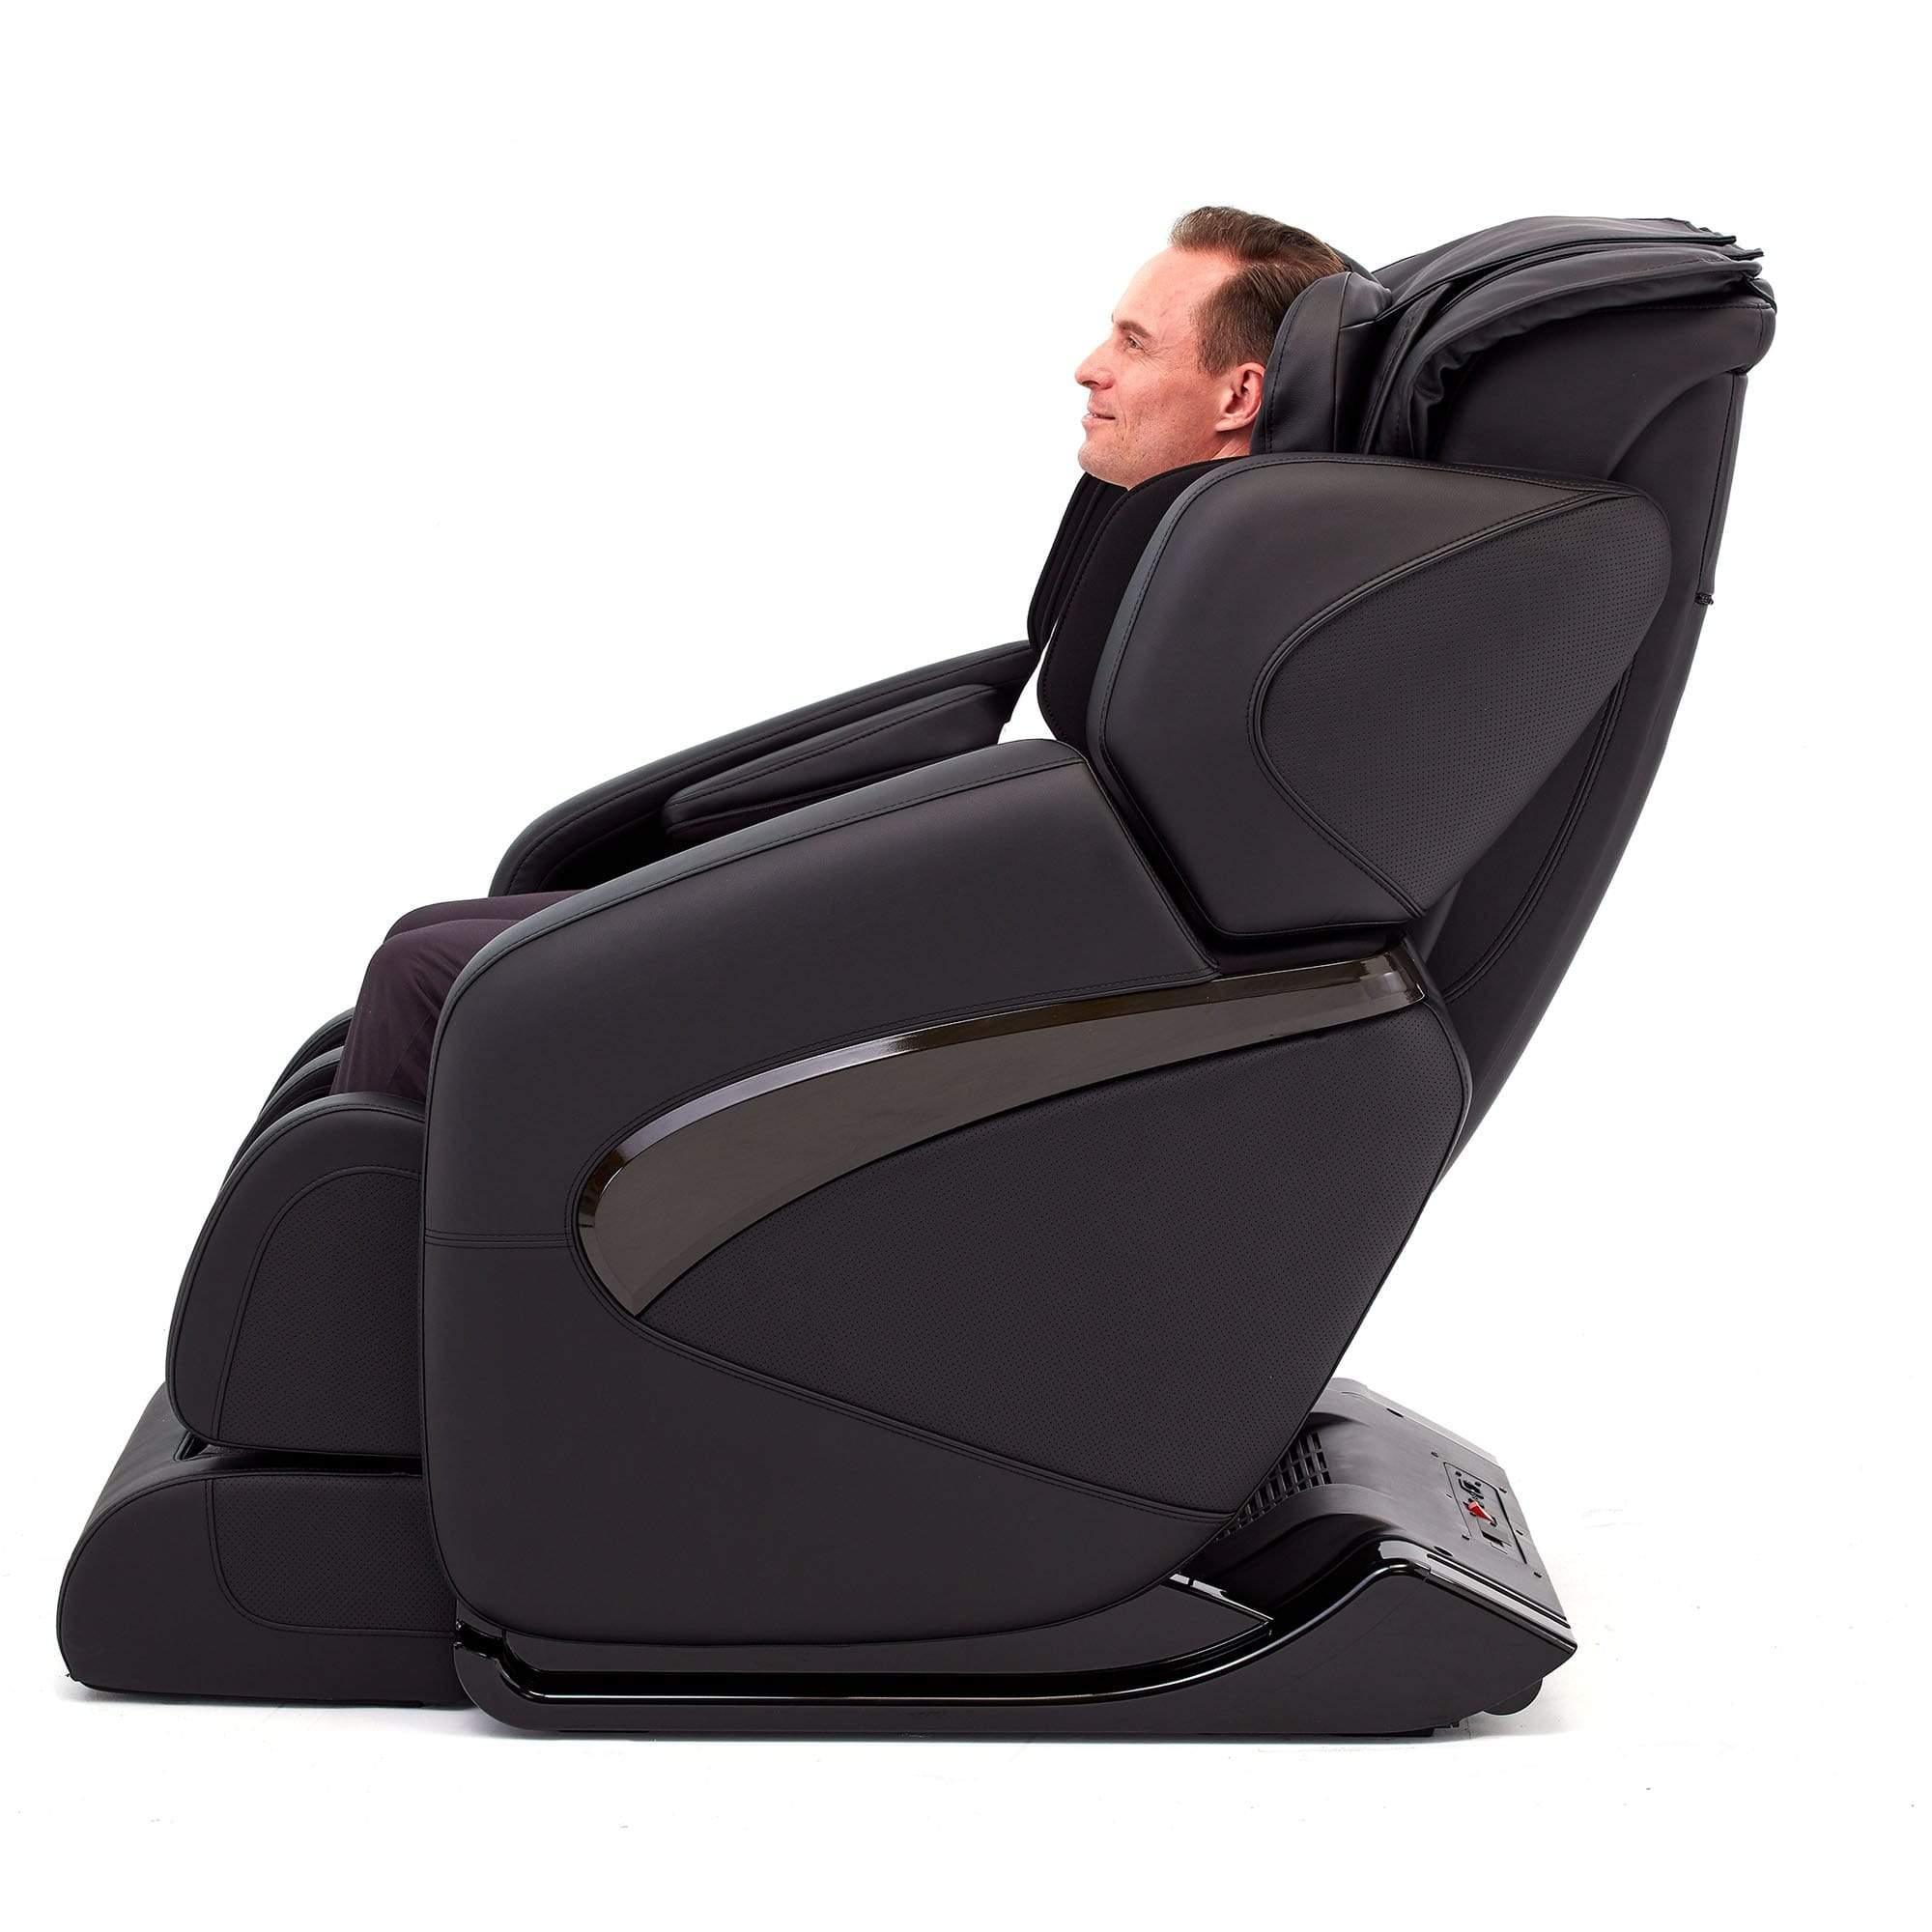 Inner Balance Wellness Jin Deluxe Zero Gravity L-Track Massage Chair